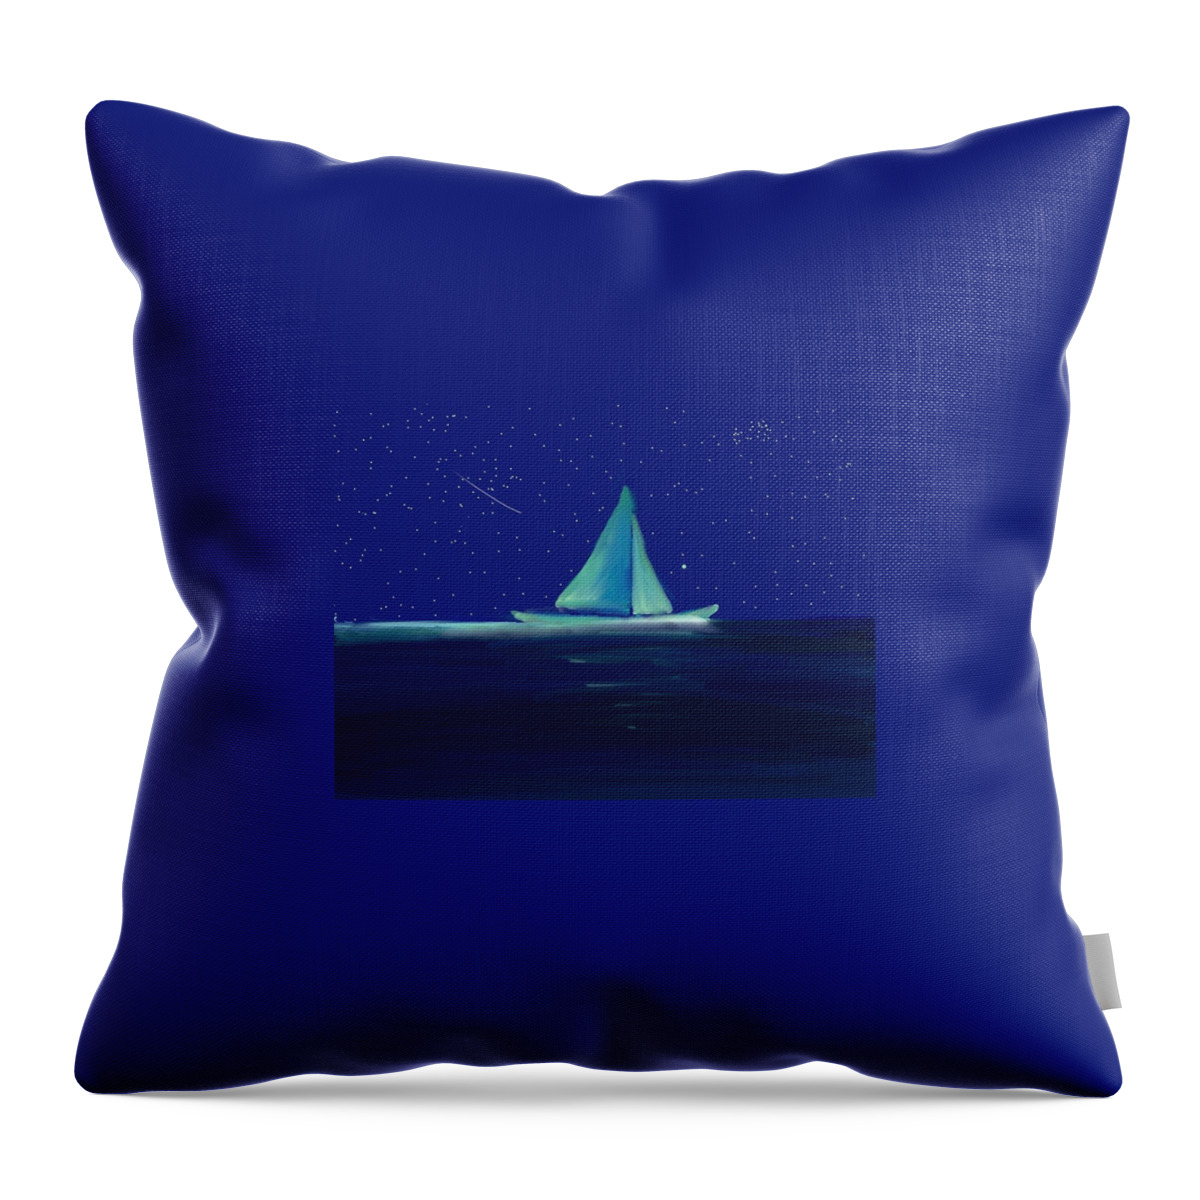 Moonlight Sail Throw Pillow featuring the digital art Moonlight Sail by Bill Tomsa